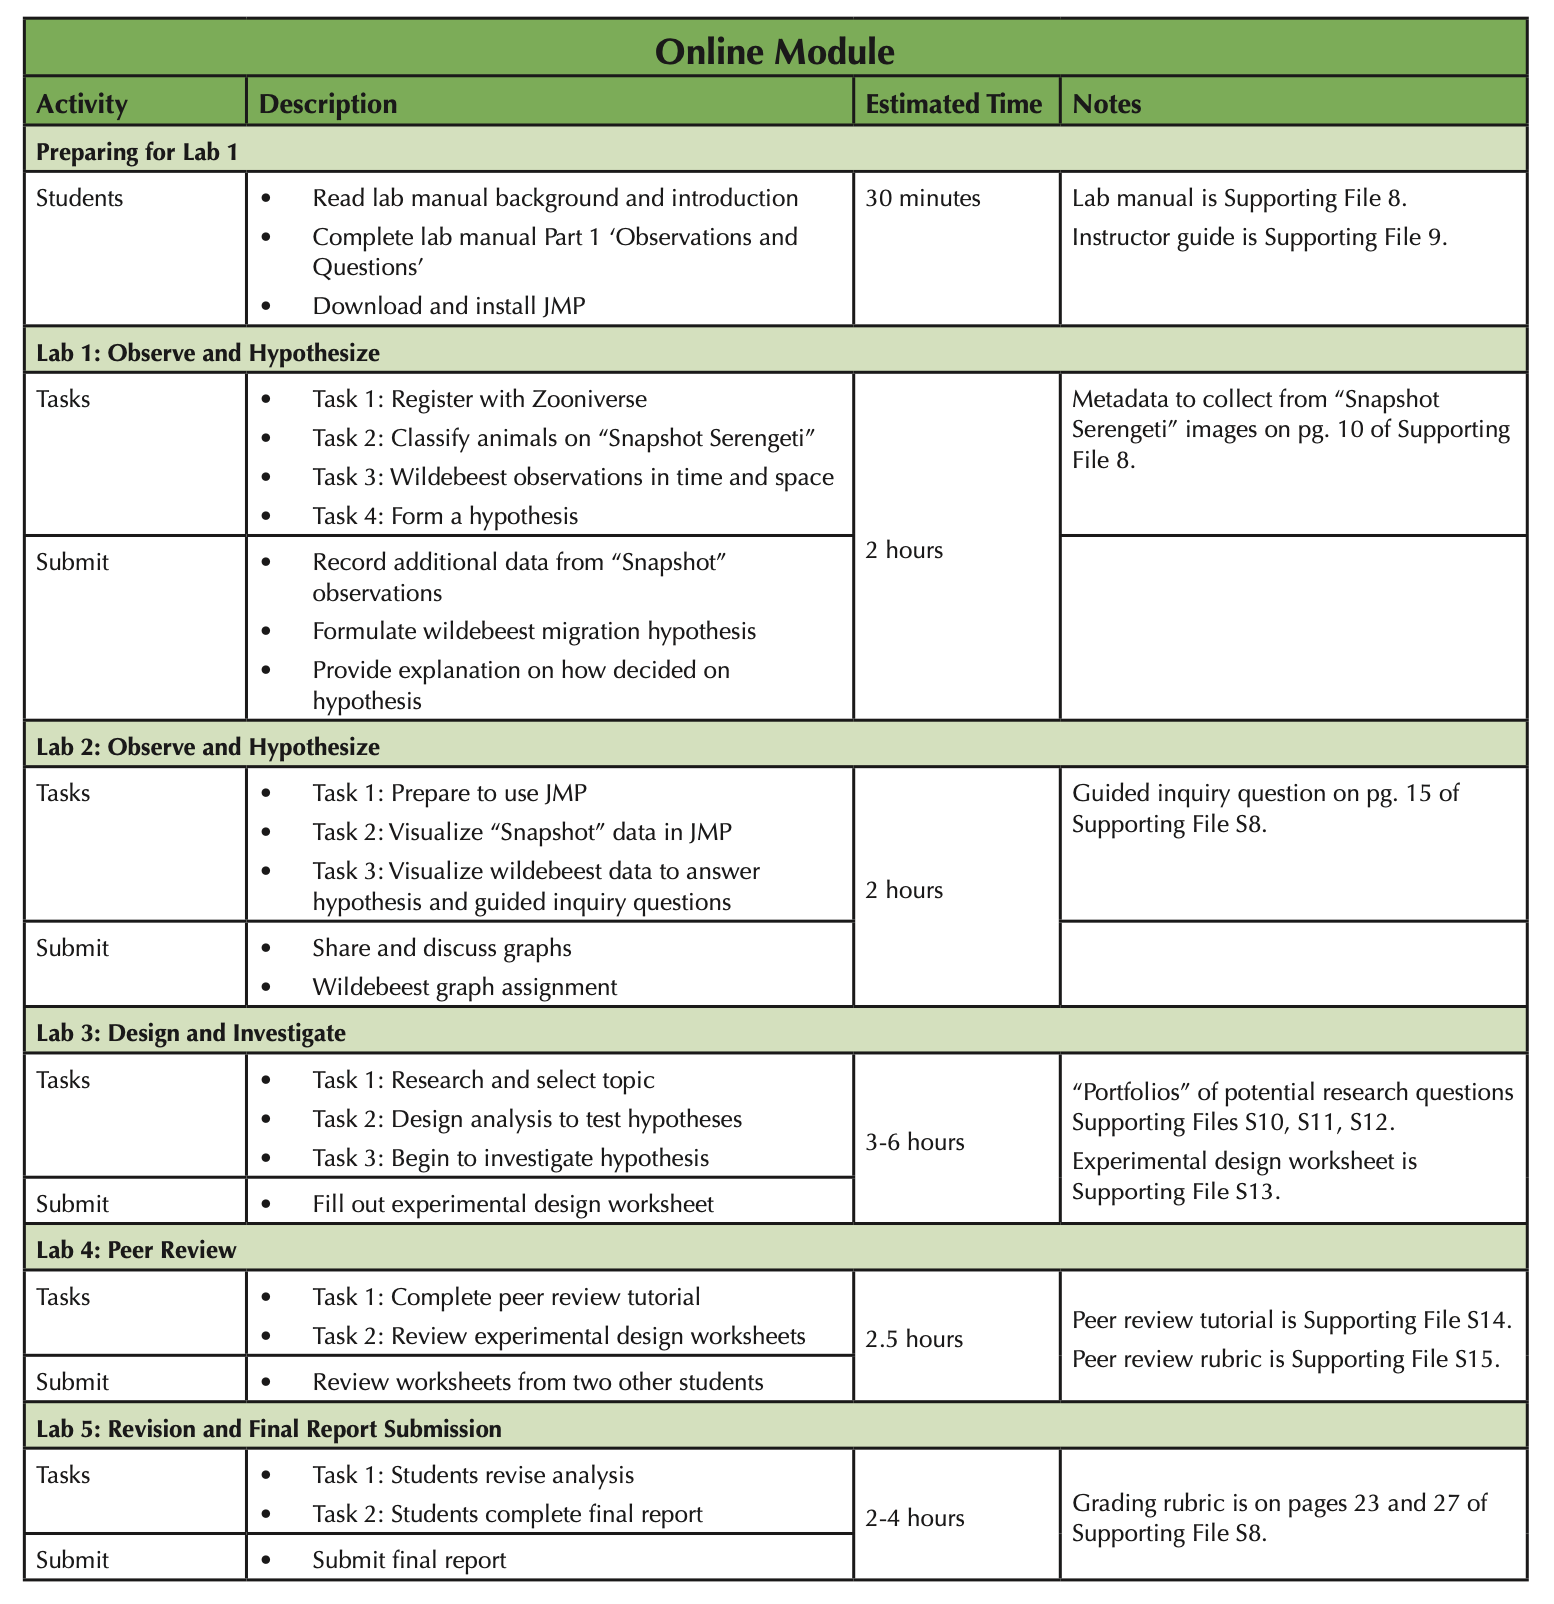 Table 1. Timeline of activities (online).